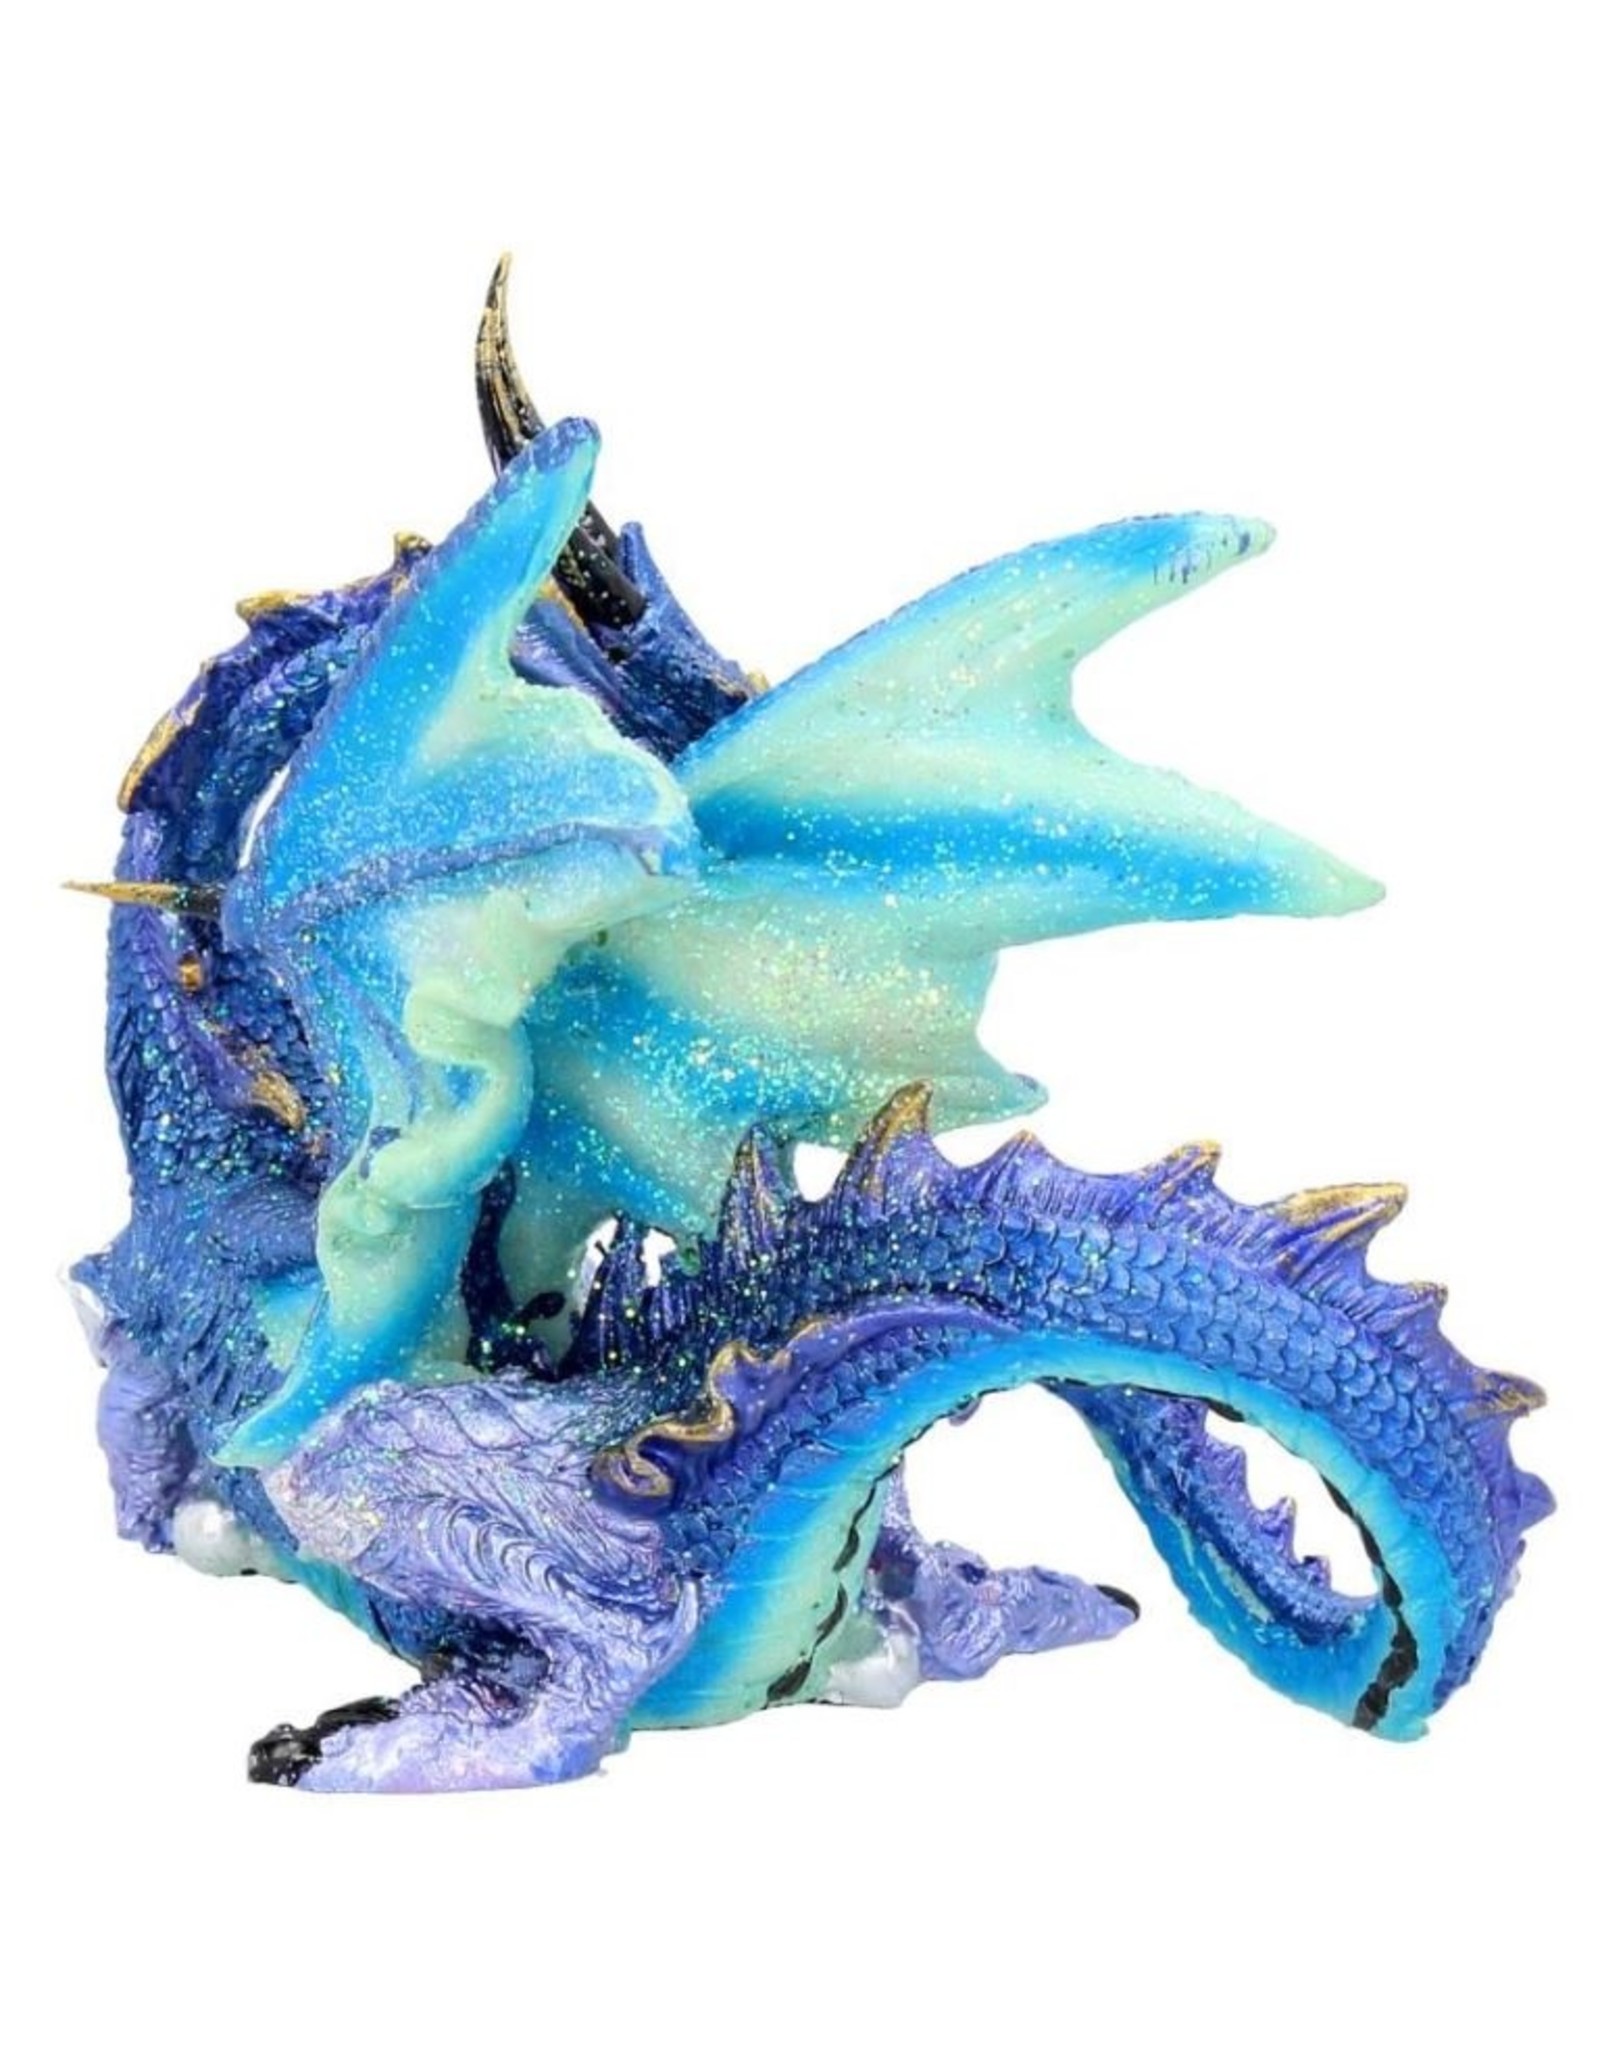 Alator Giftware & Lyfstyle - Piasa Small Fantasy Dragon Figurine